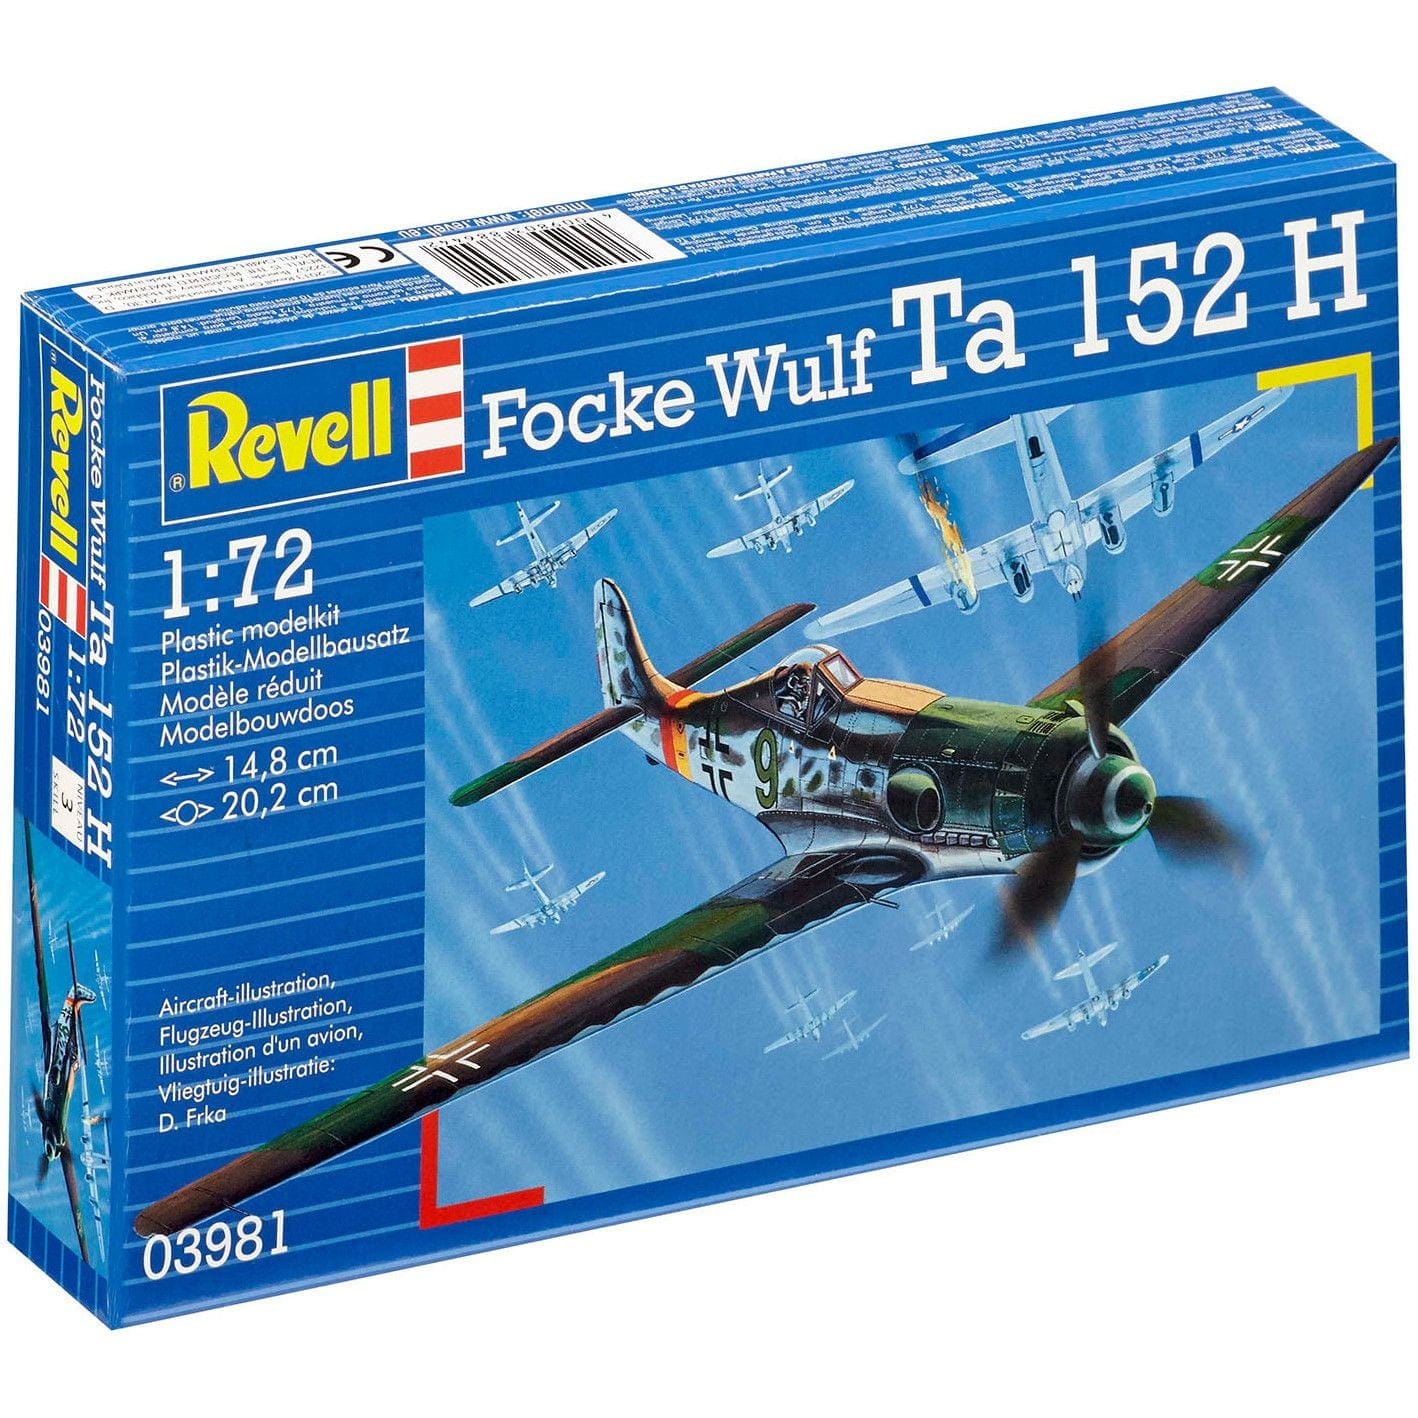 Focke Wulf Ta 152 H Revell 03981 1:72 